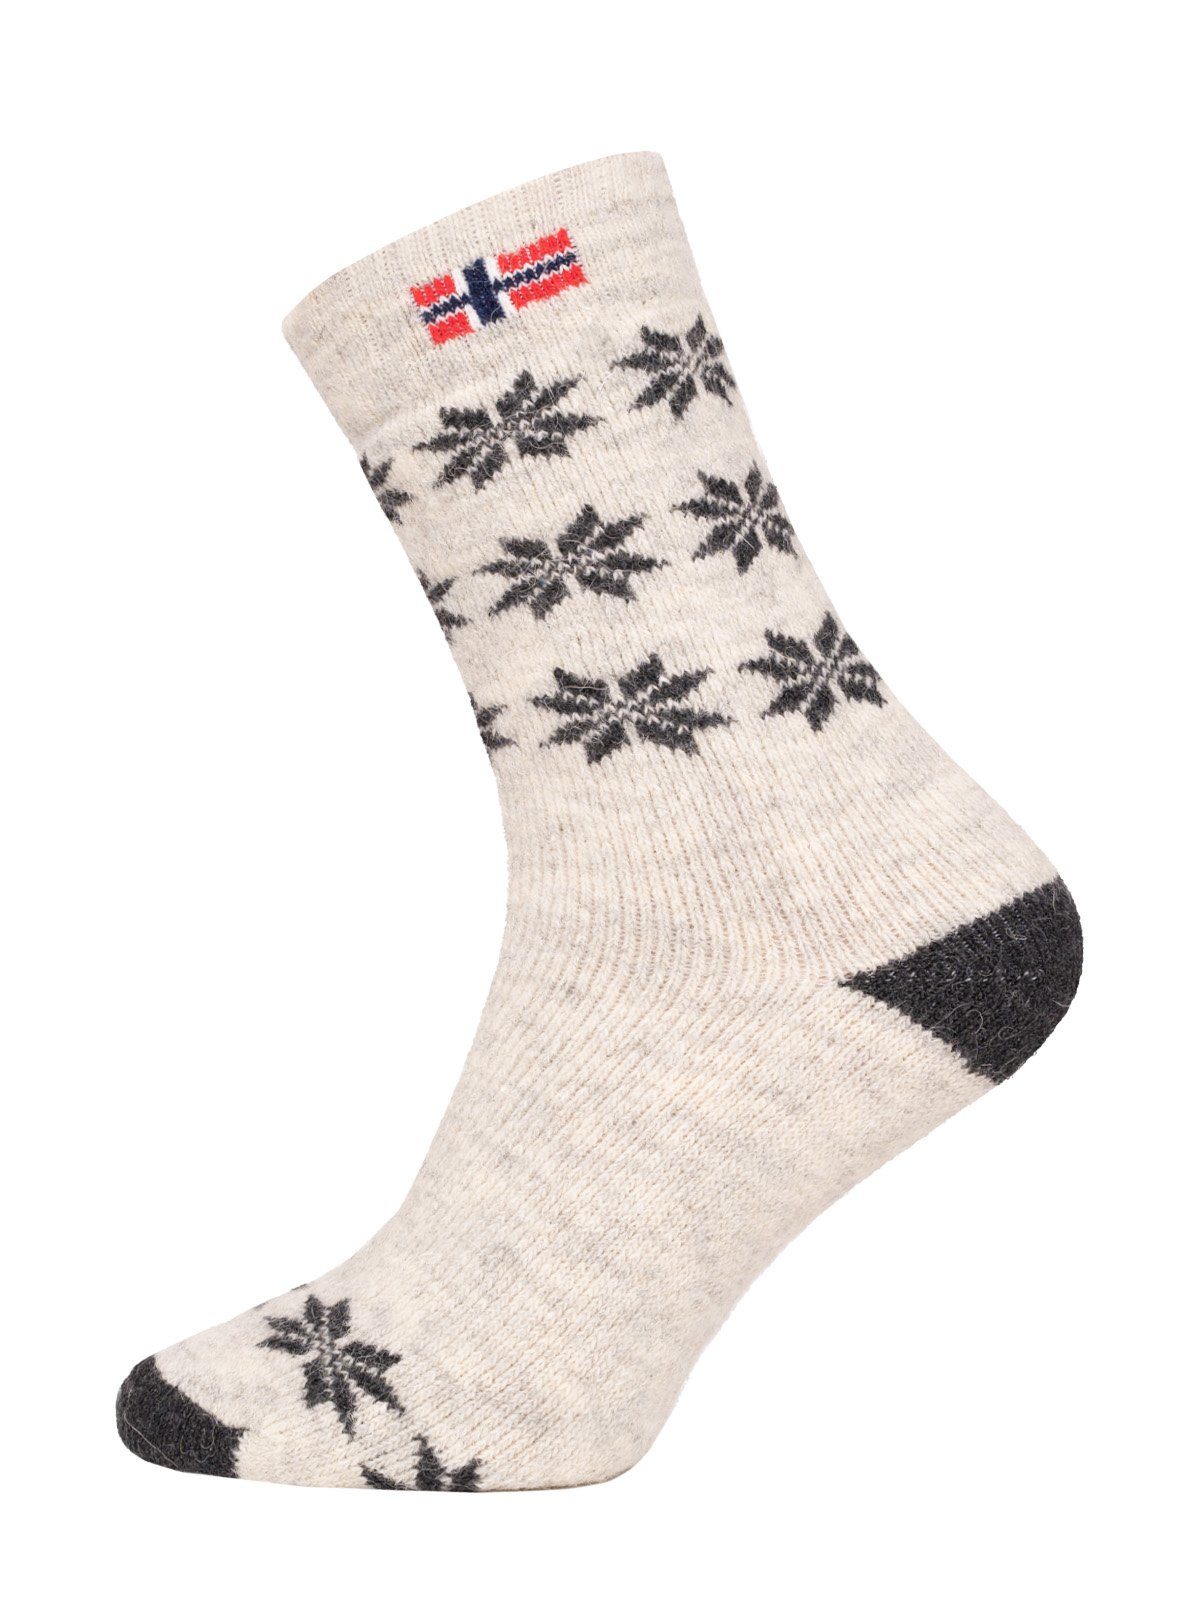 Wollsocke Wollanteil Hoher Nordic HomeOfSocks Kuschelsocken Socken "Snowflake Dicke 80% Skandinavische Socken Natur Hyggelig Design Norwegischem Warm Norwegen"